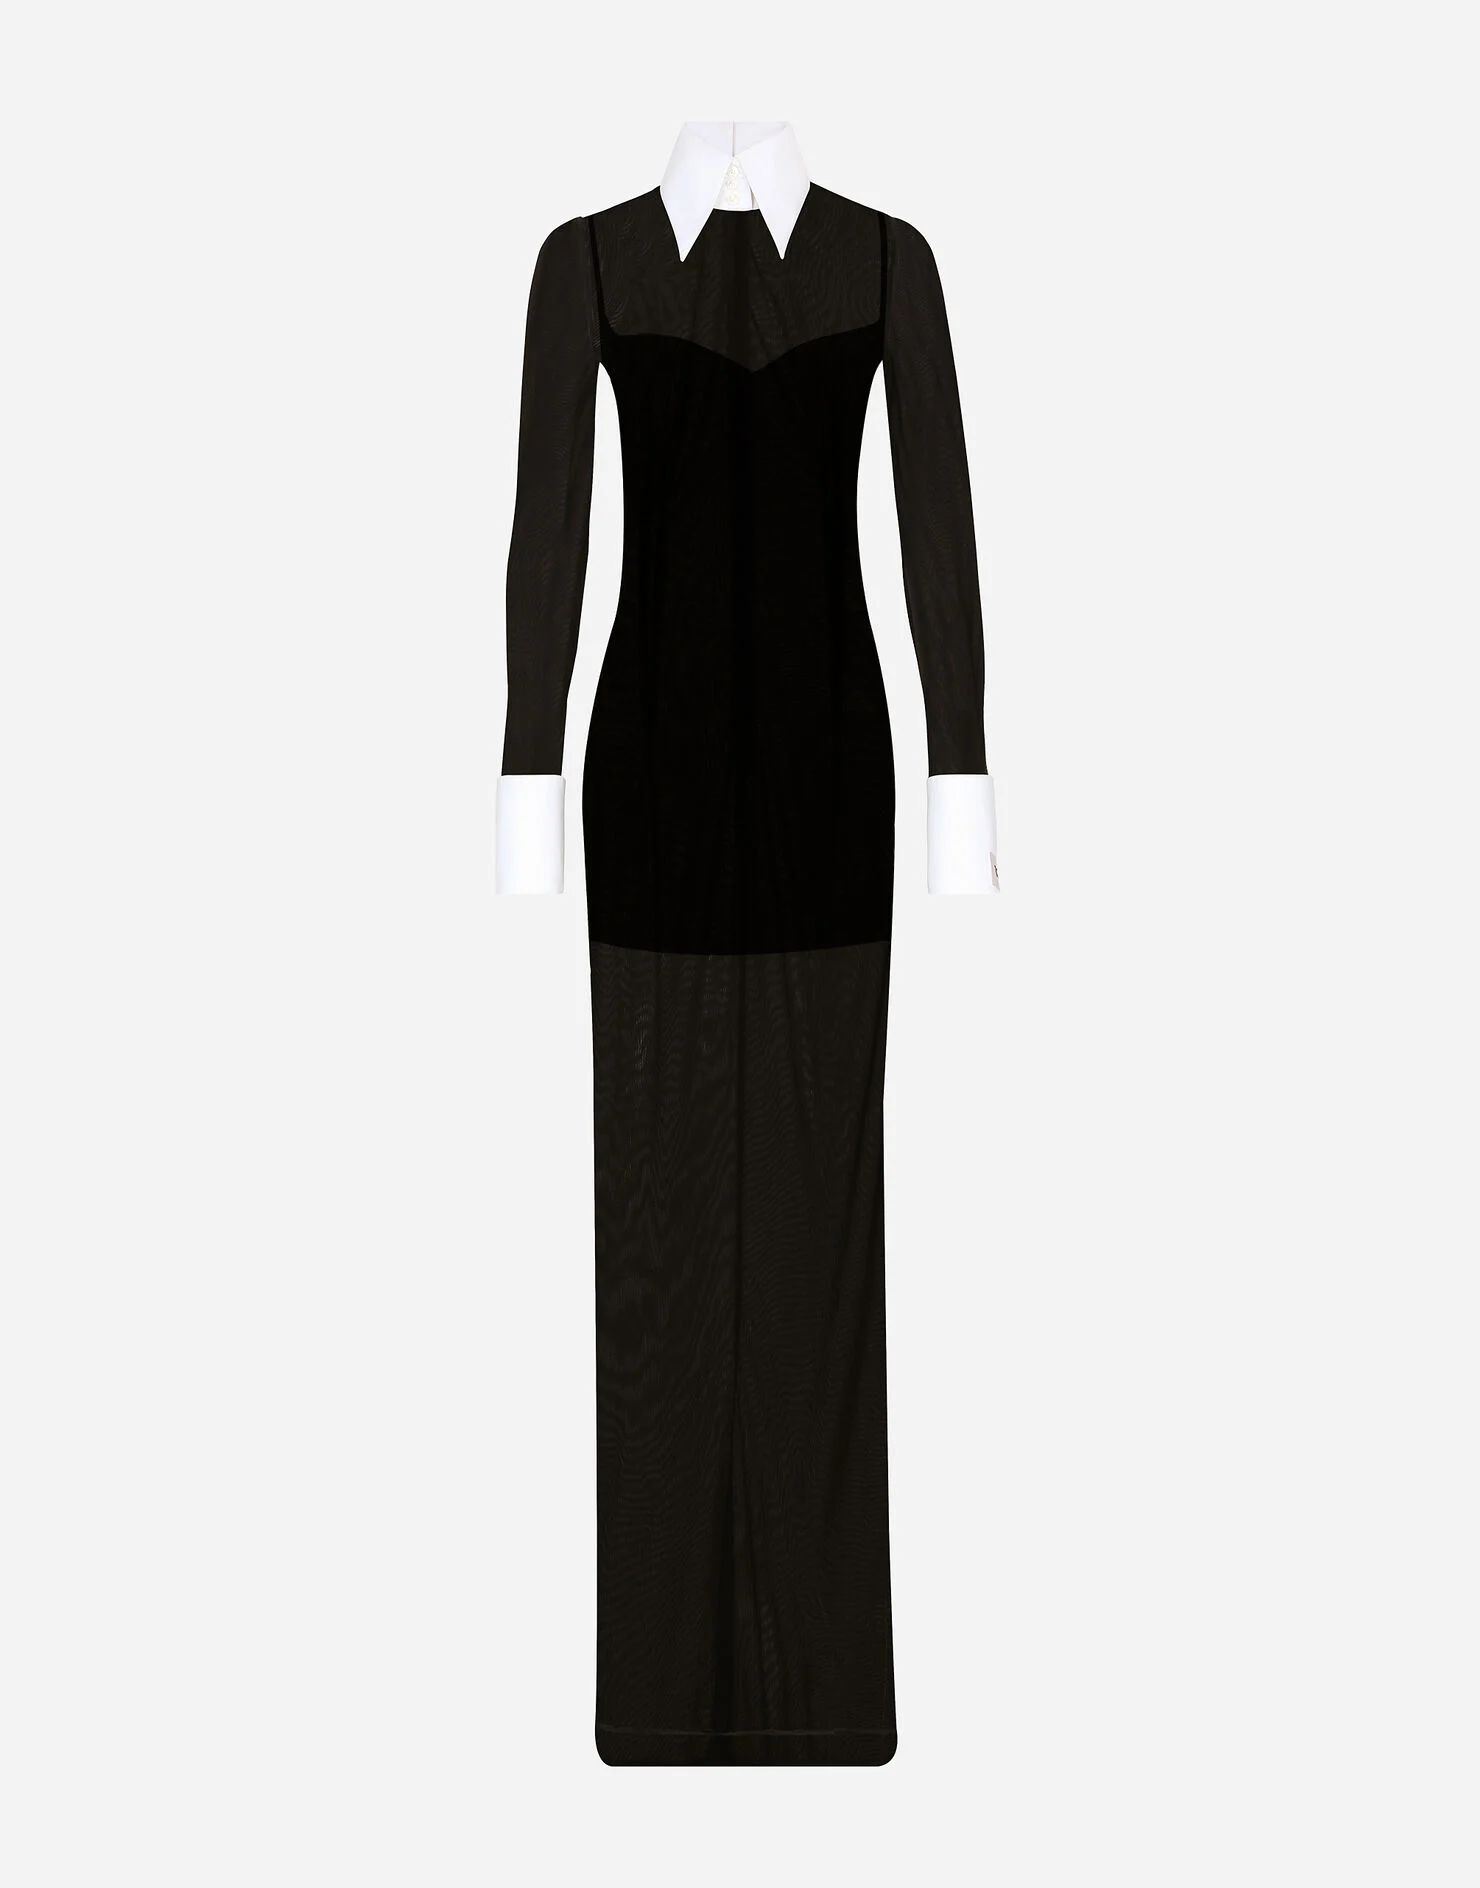 KIM DOLCE&GABBANA Long tulle dress with shirt detailing | Dolce & Gabbana - INT